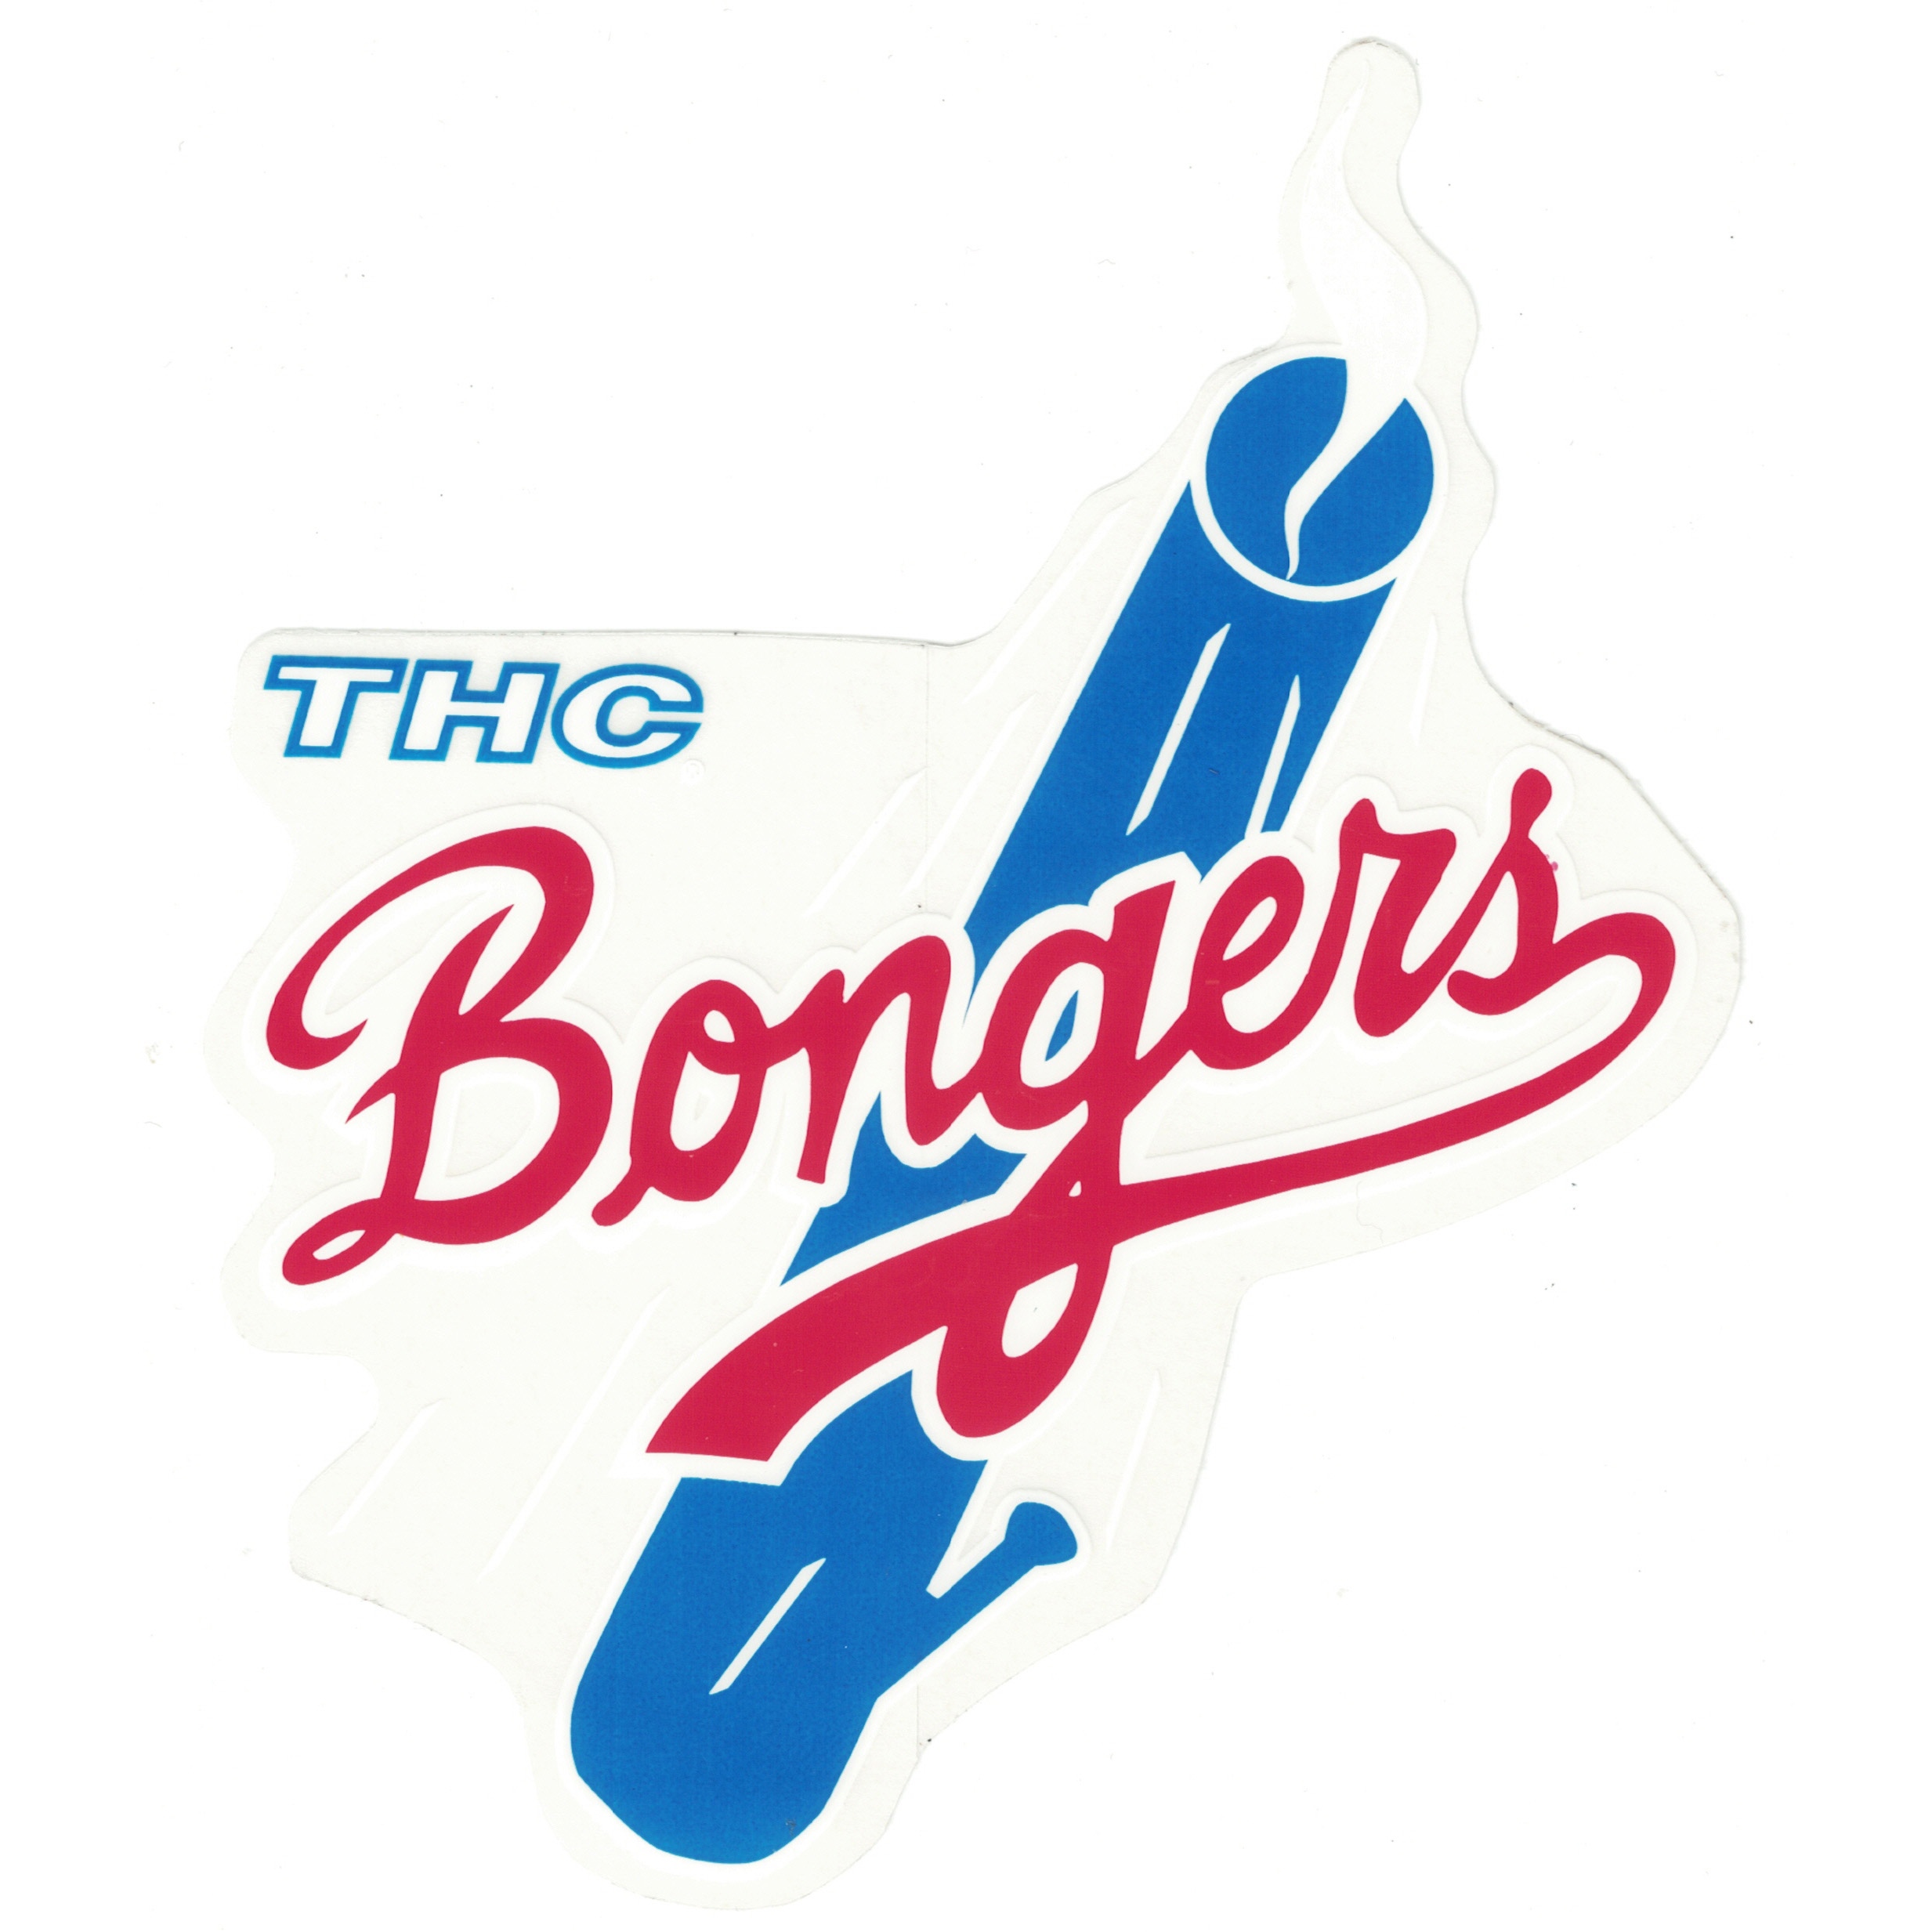 THC Dodgers Bongers